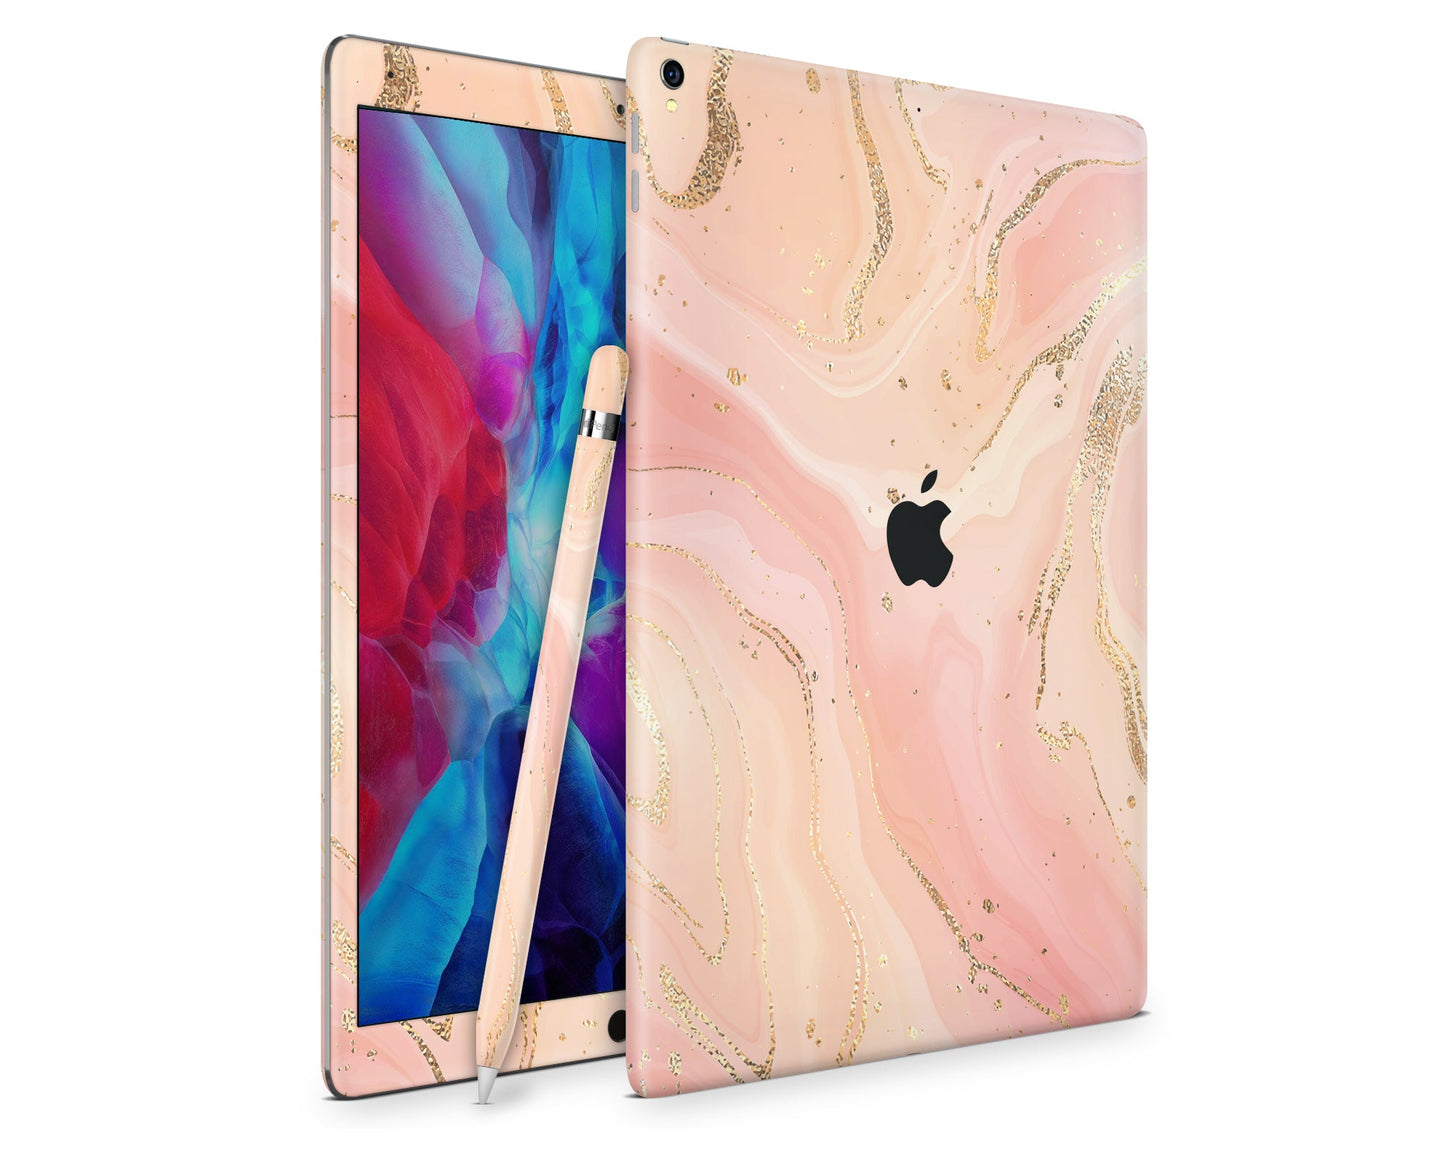 Lux Skins iPad Ethereal Peach Pink Marble iPad Pro 12.9" Gen 5 Skins - Pattern Marble Skin